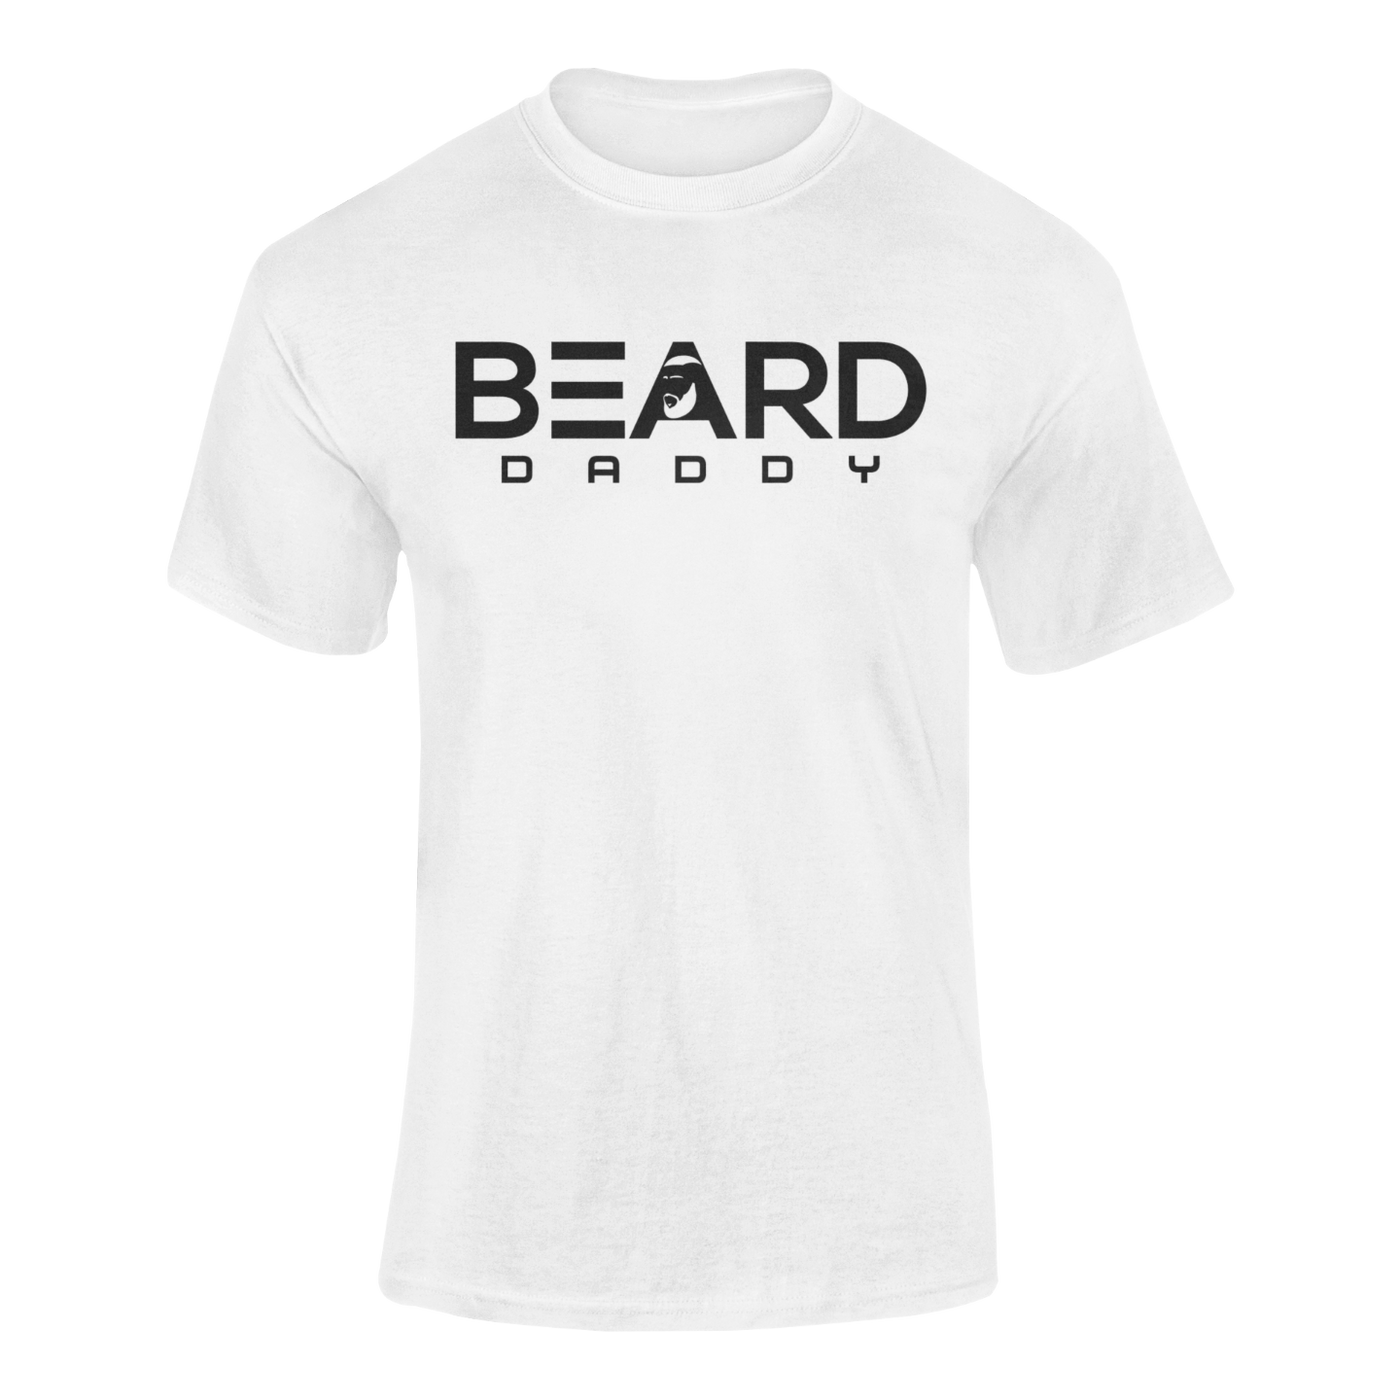 X Beard Daddy Logo T-Shirt X